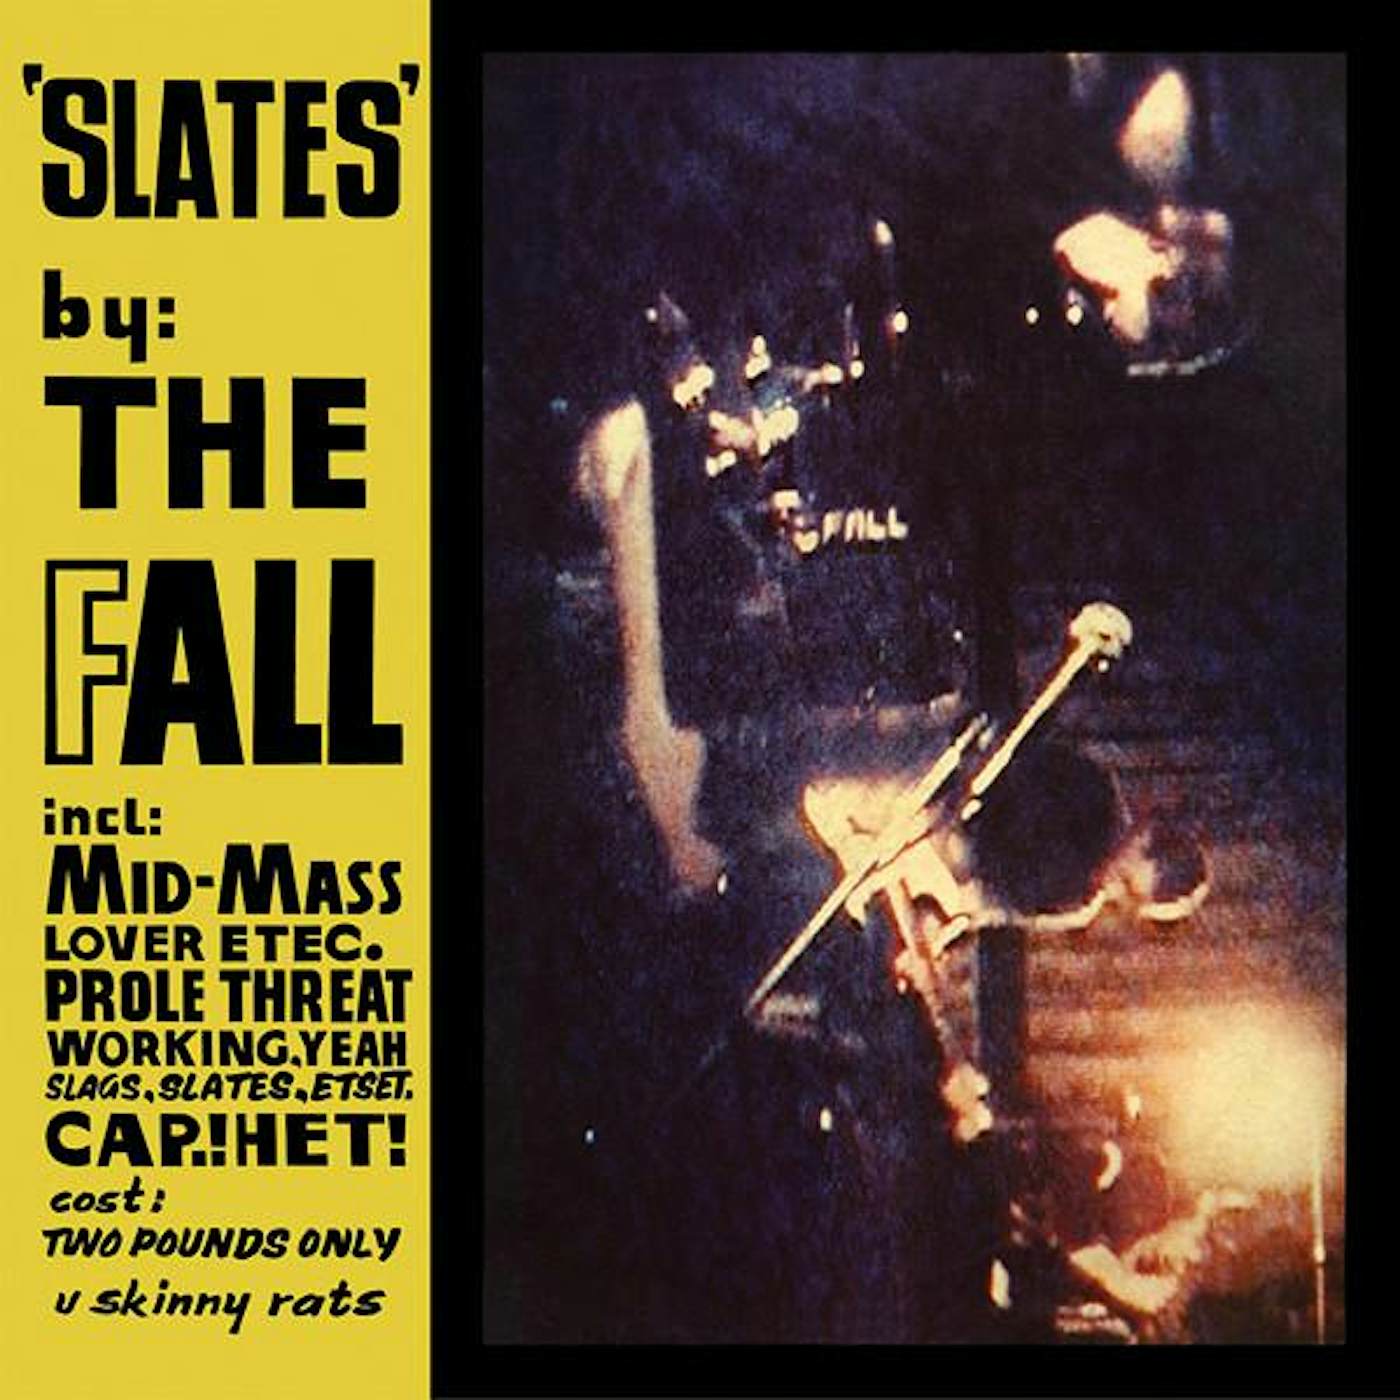 The Fall SLATES LP Vinyl Record